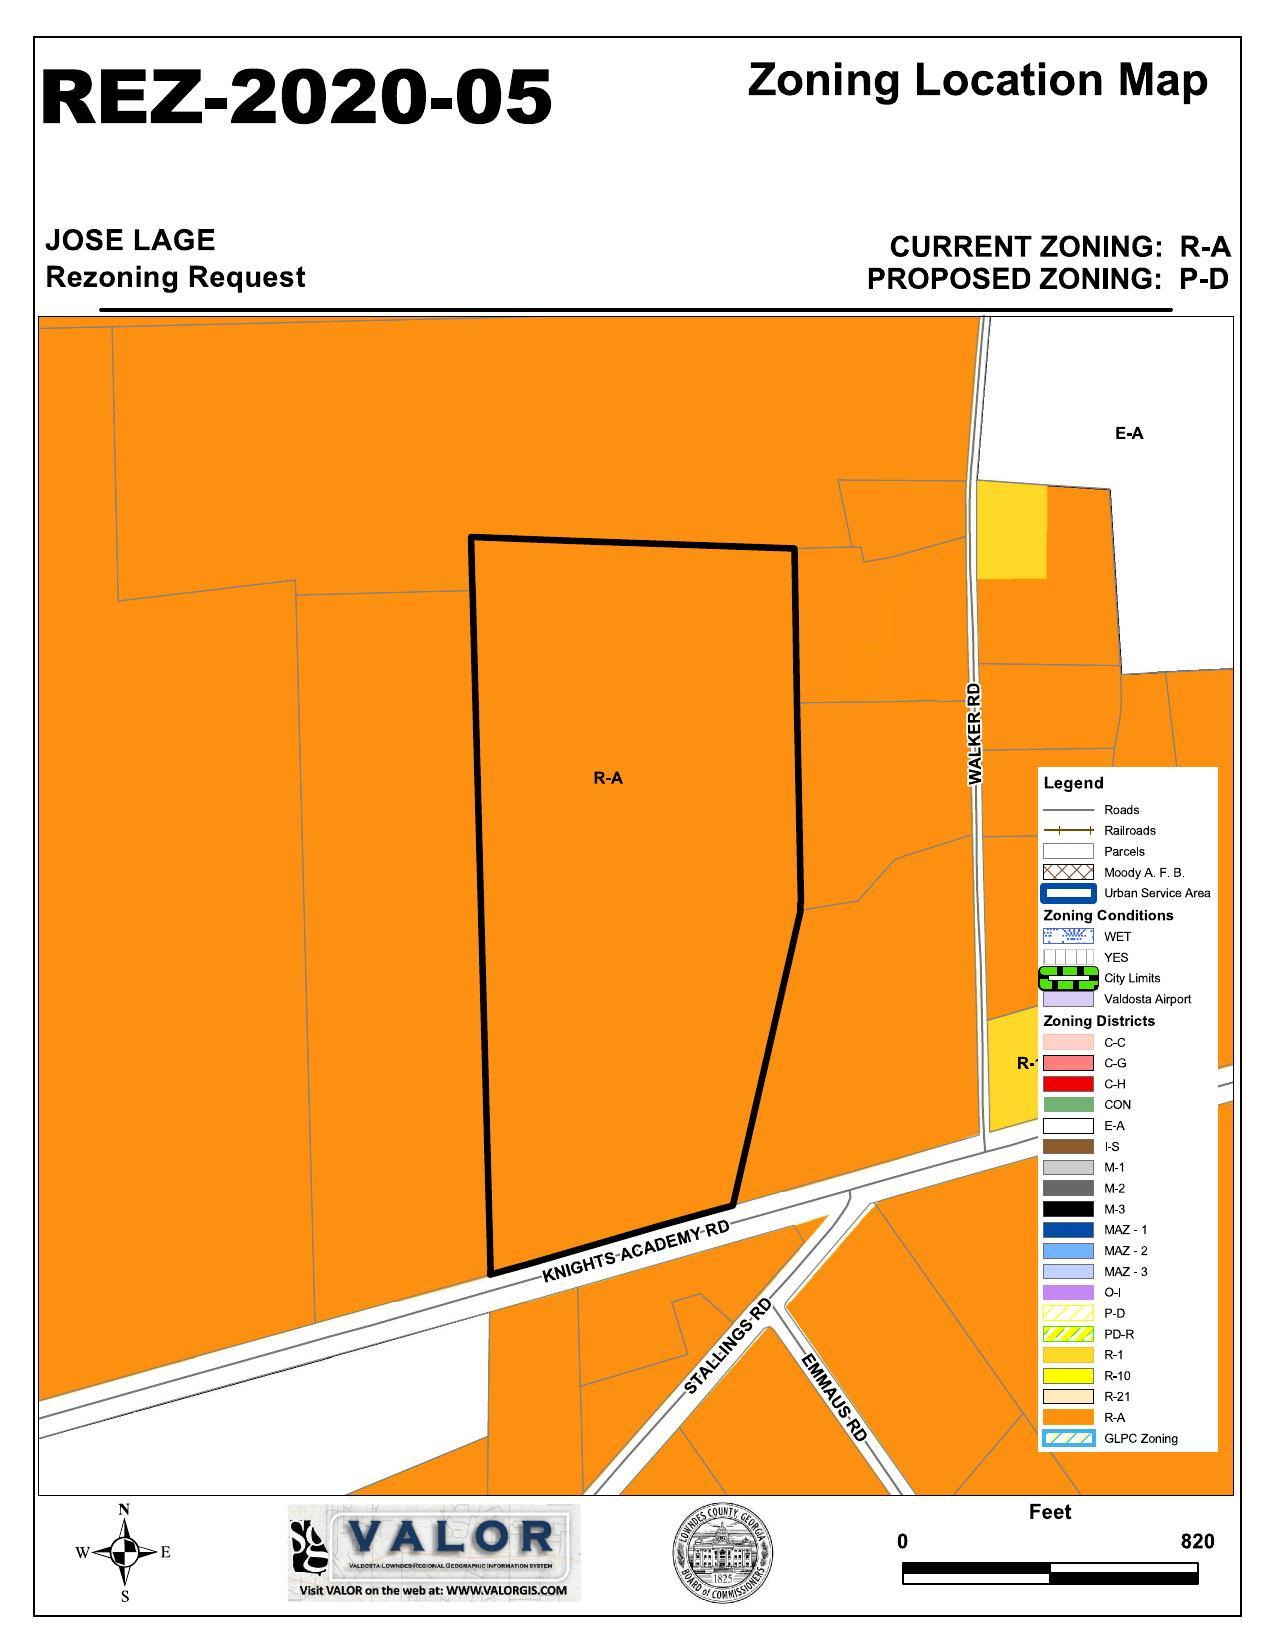 Zoning Location Map